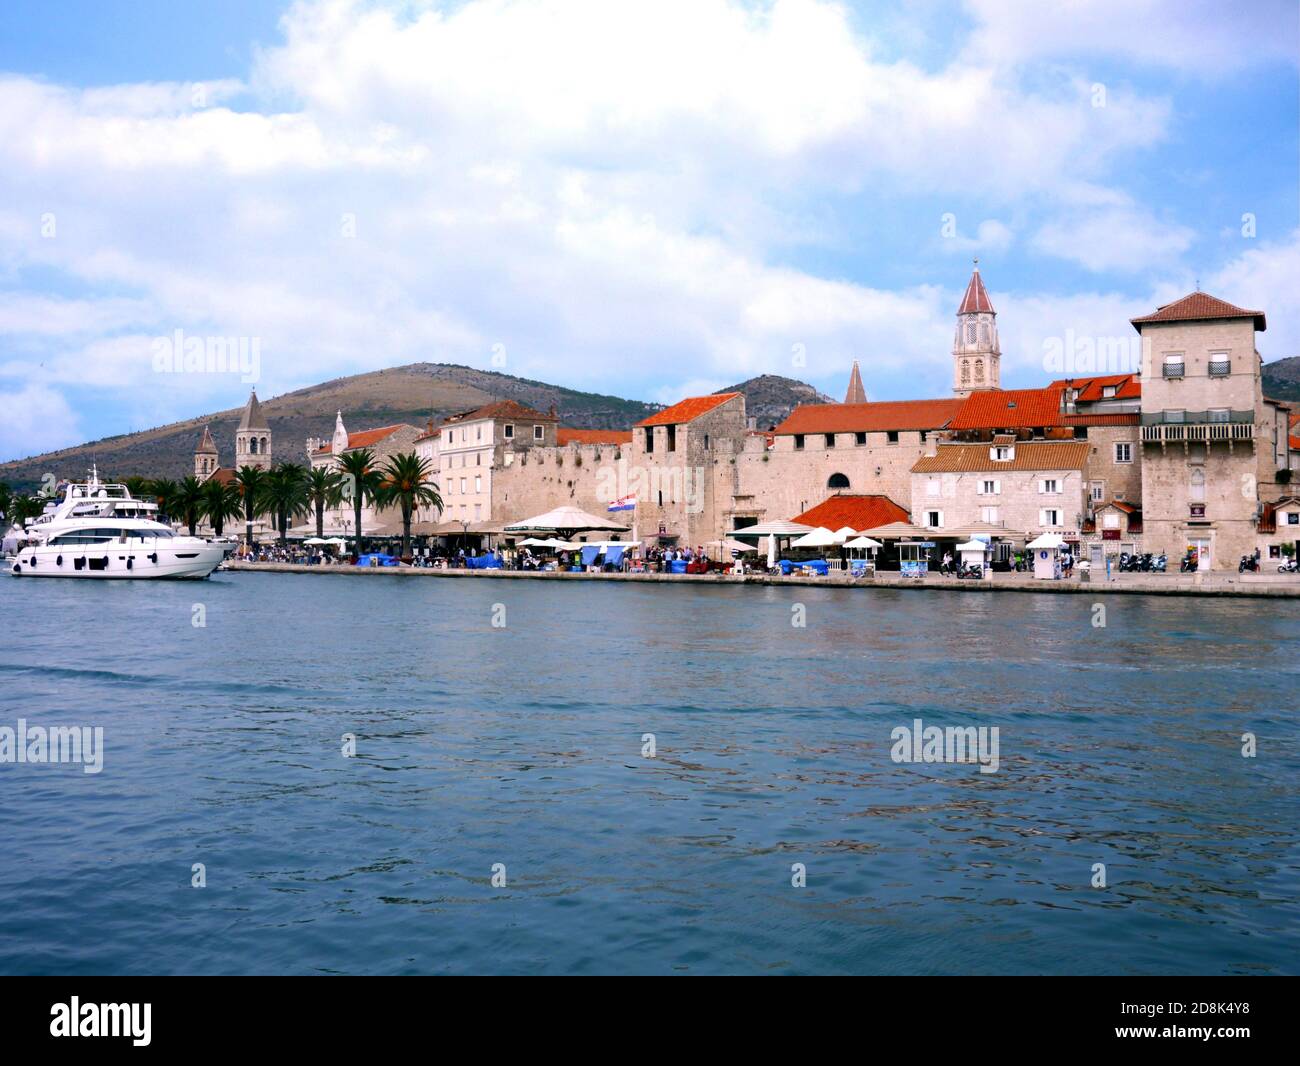 Old Town Trogir, Croatia. Trogir is popular travel destination in Dalmatia, Croatia. Trogir is a UNESCO World Heritage Site. Stock Photo